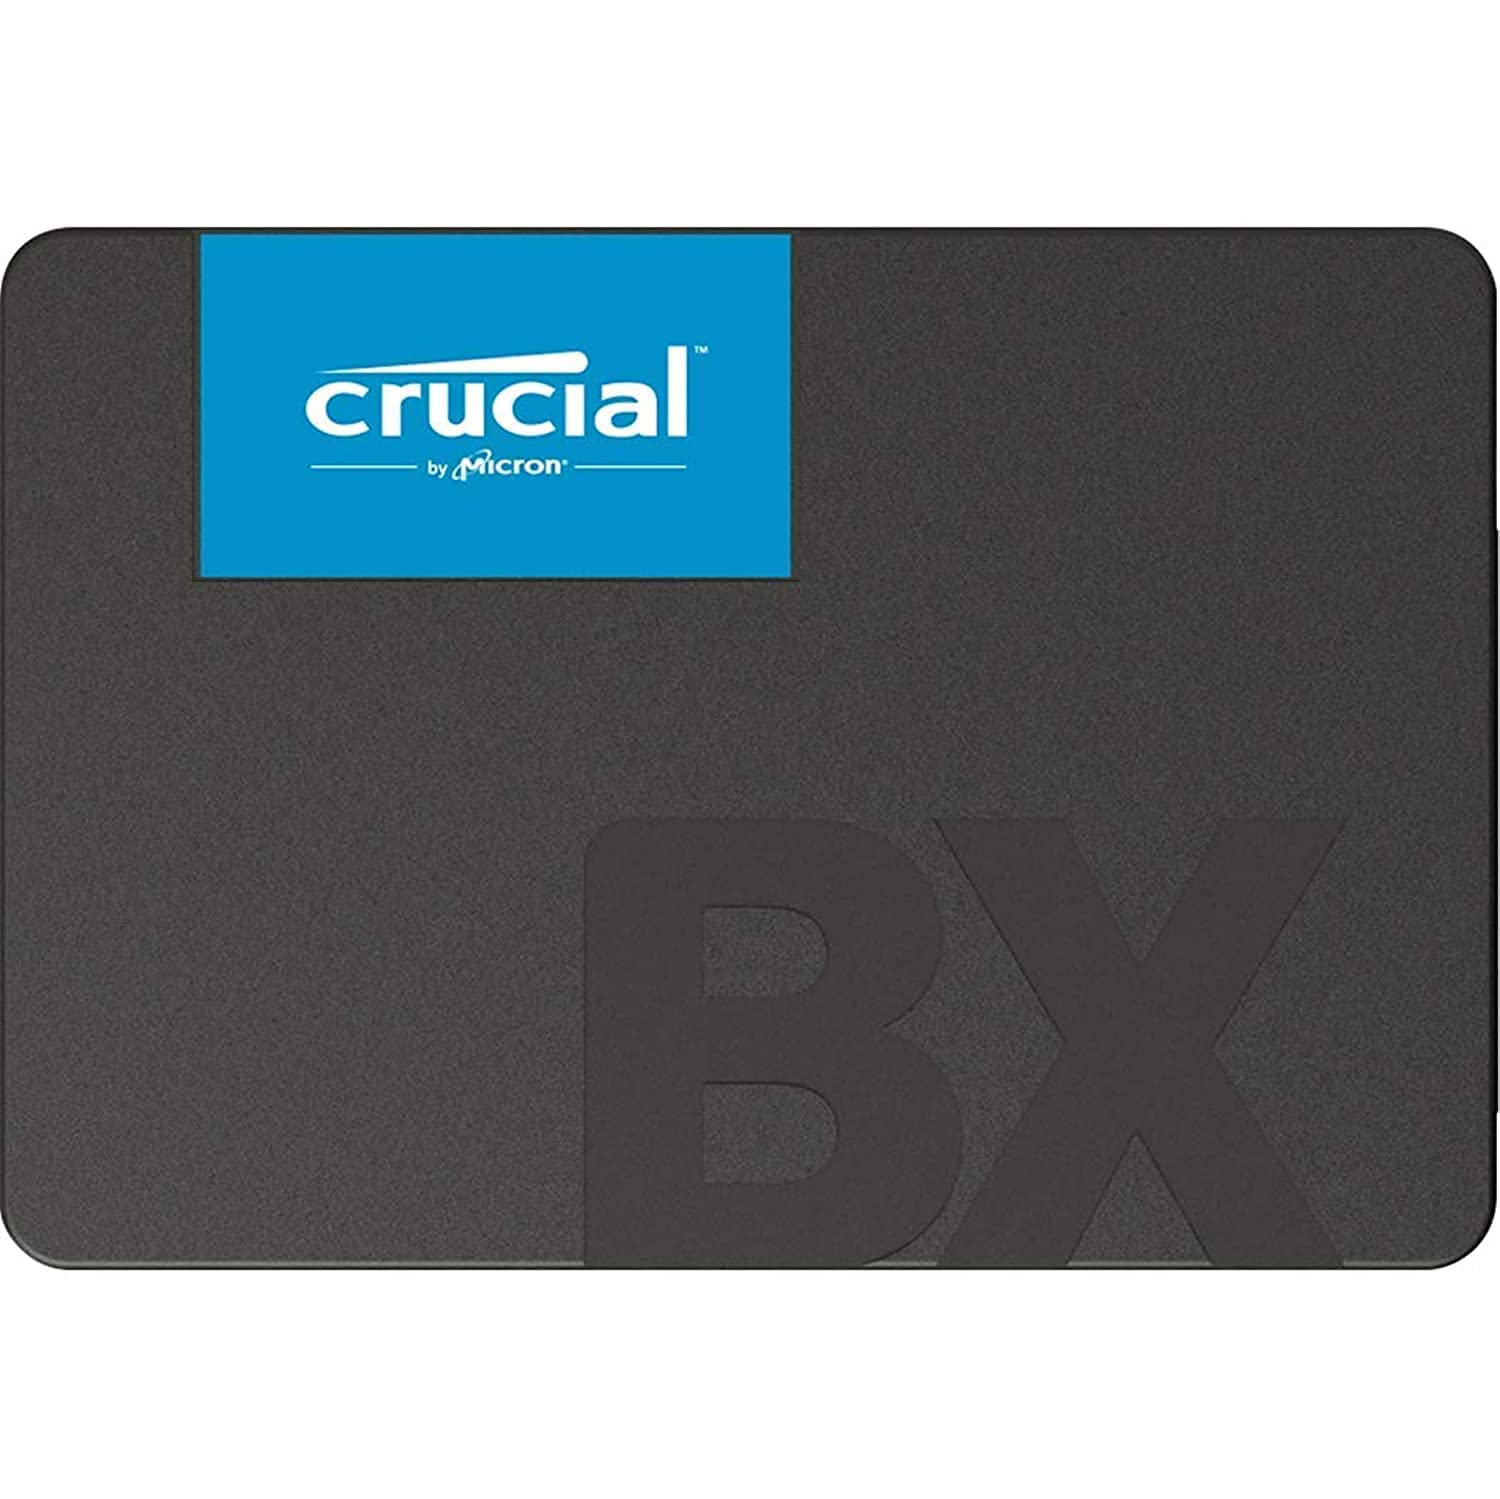 Crucial クルーシャル SSD 2TB2000GB BX500 SATA 内蔵2.5インチ 7mm CT2000BX500SSD1